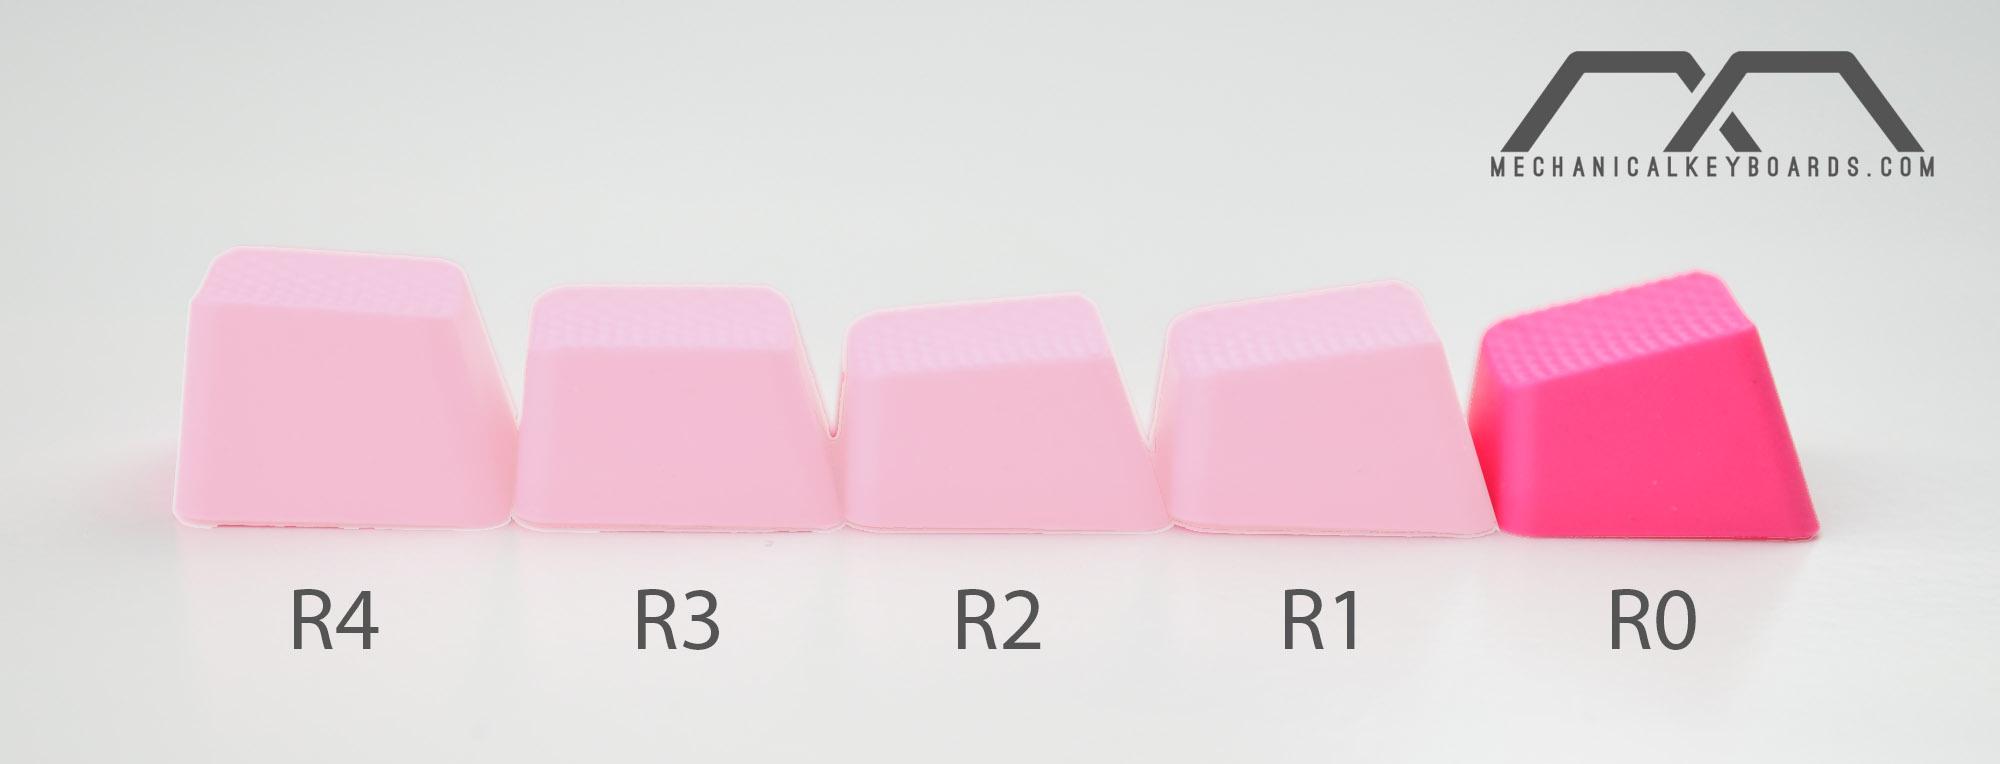 Tai-Hao 4 Key TPR Blank Rubber Keycap Set Neon Pink Row 0 MKWI85AHY3 |0|